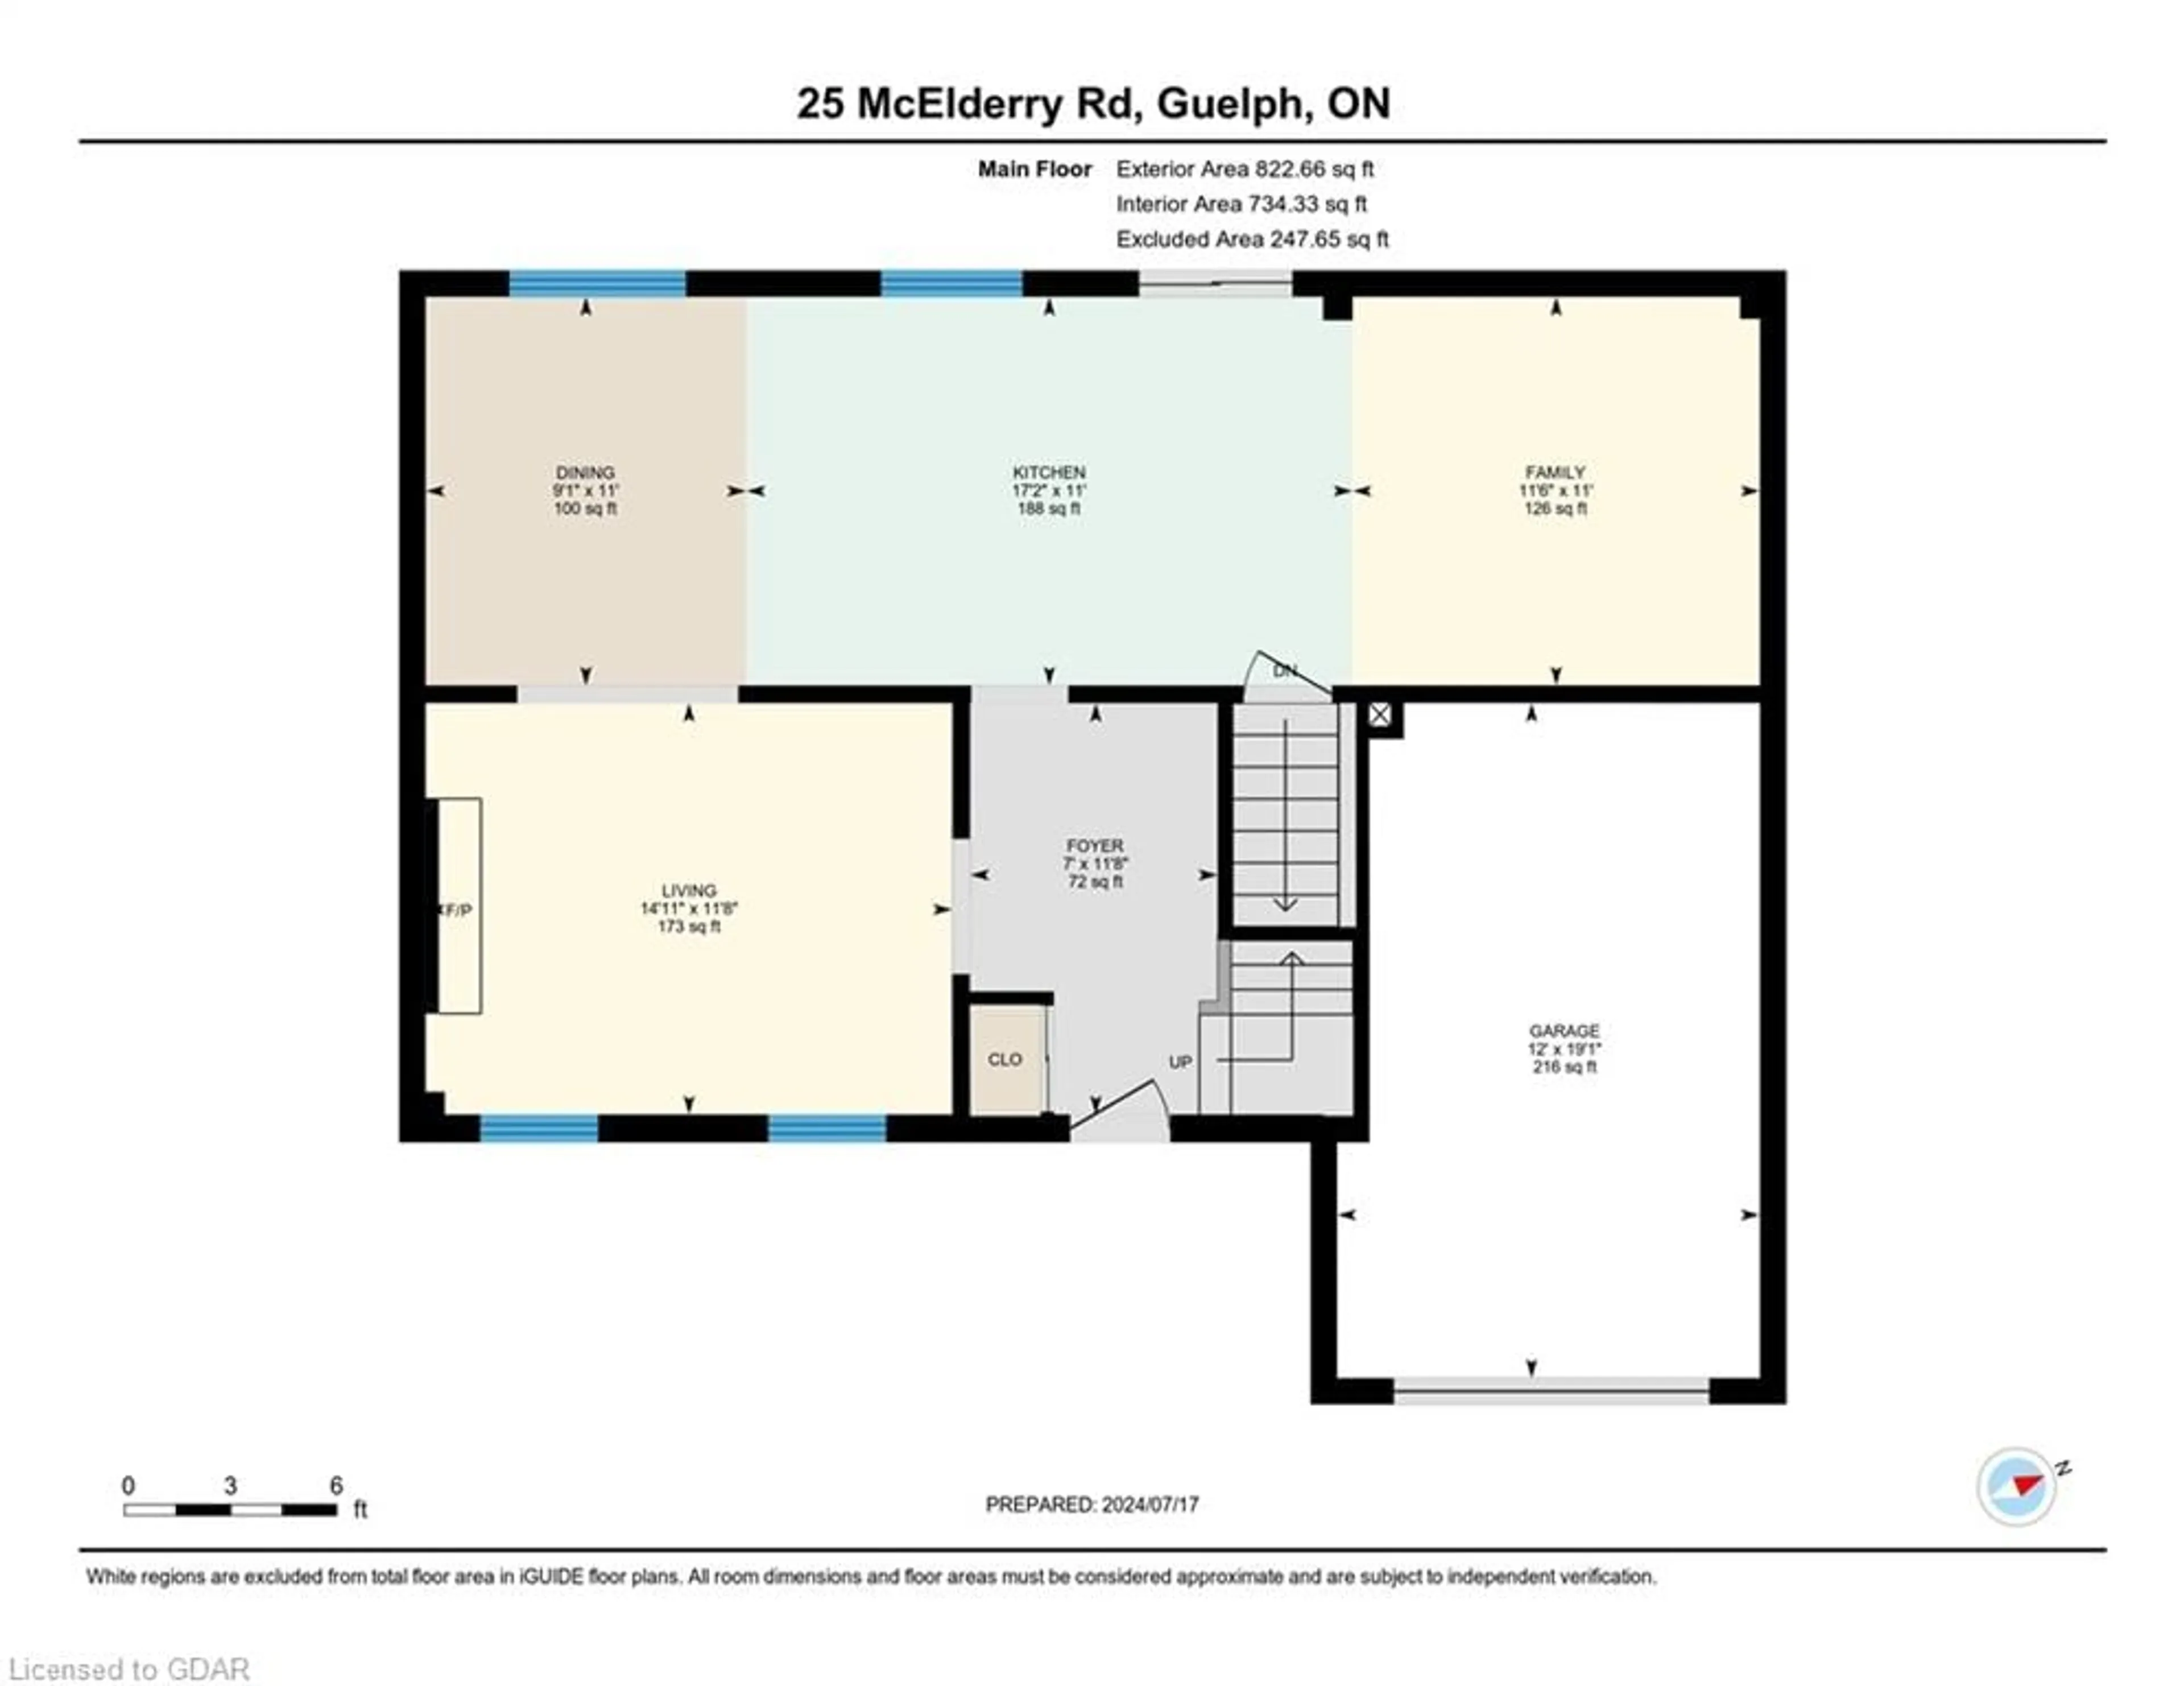 Floor plan for 25 Mcelderry Rd, Guelph Ontario N1G 4K2